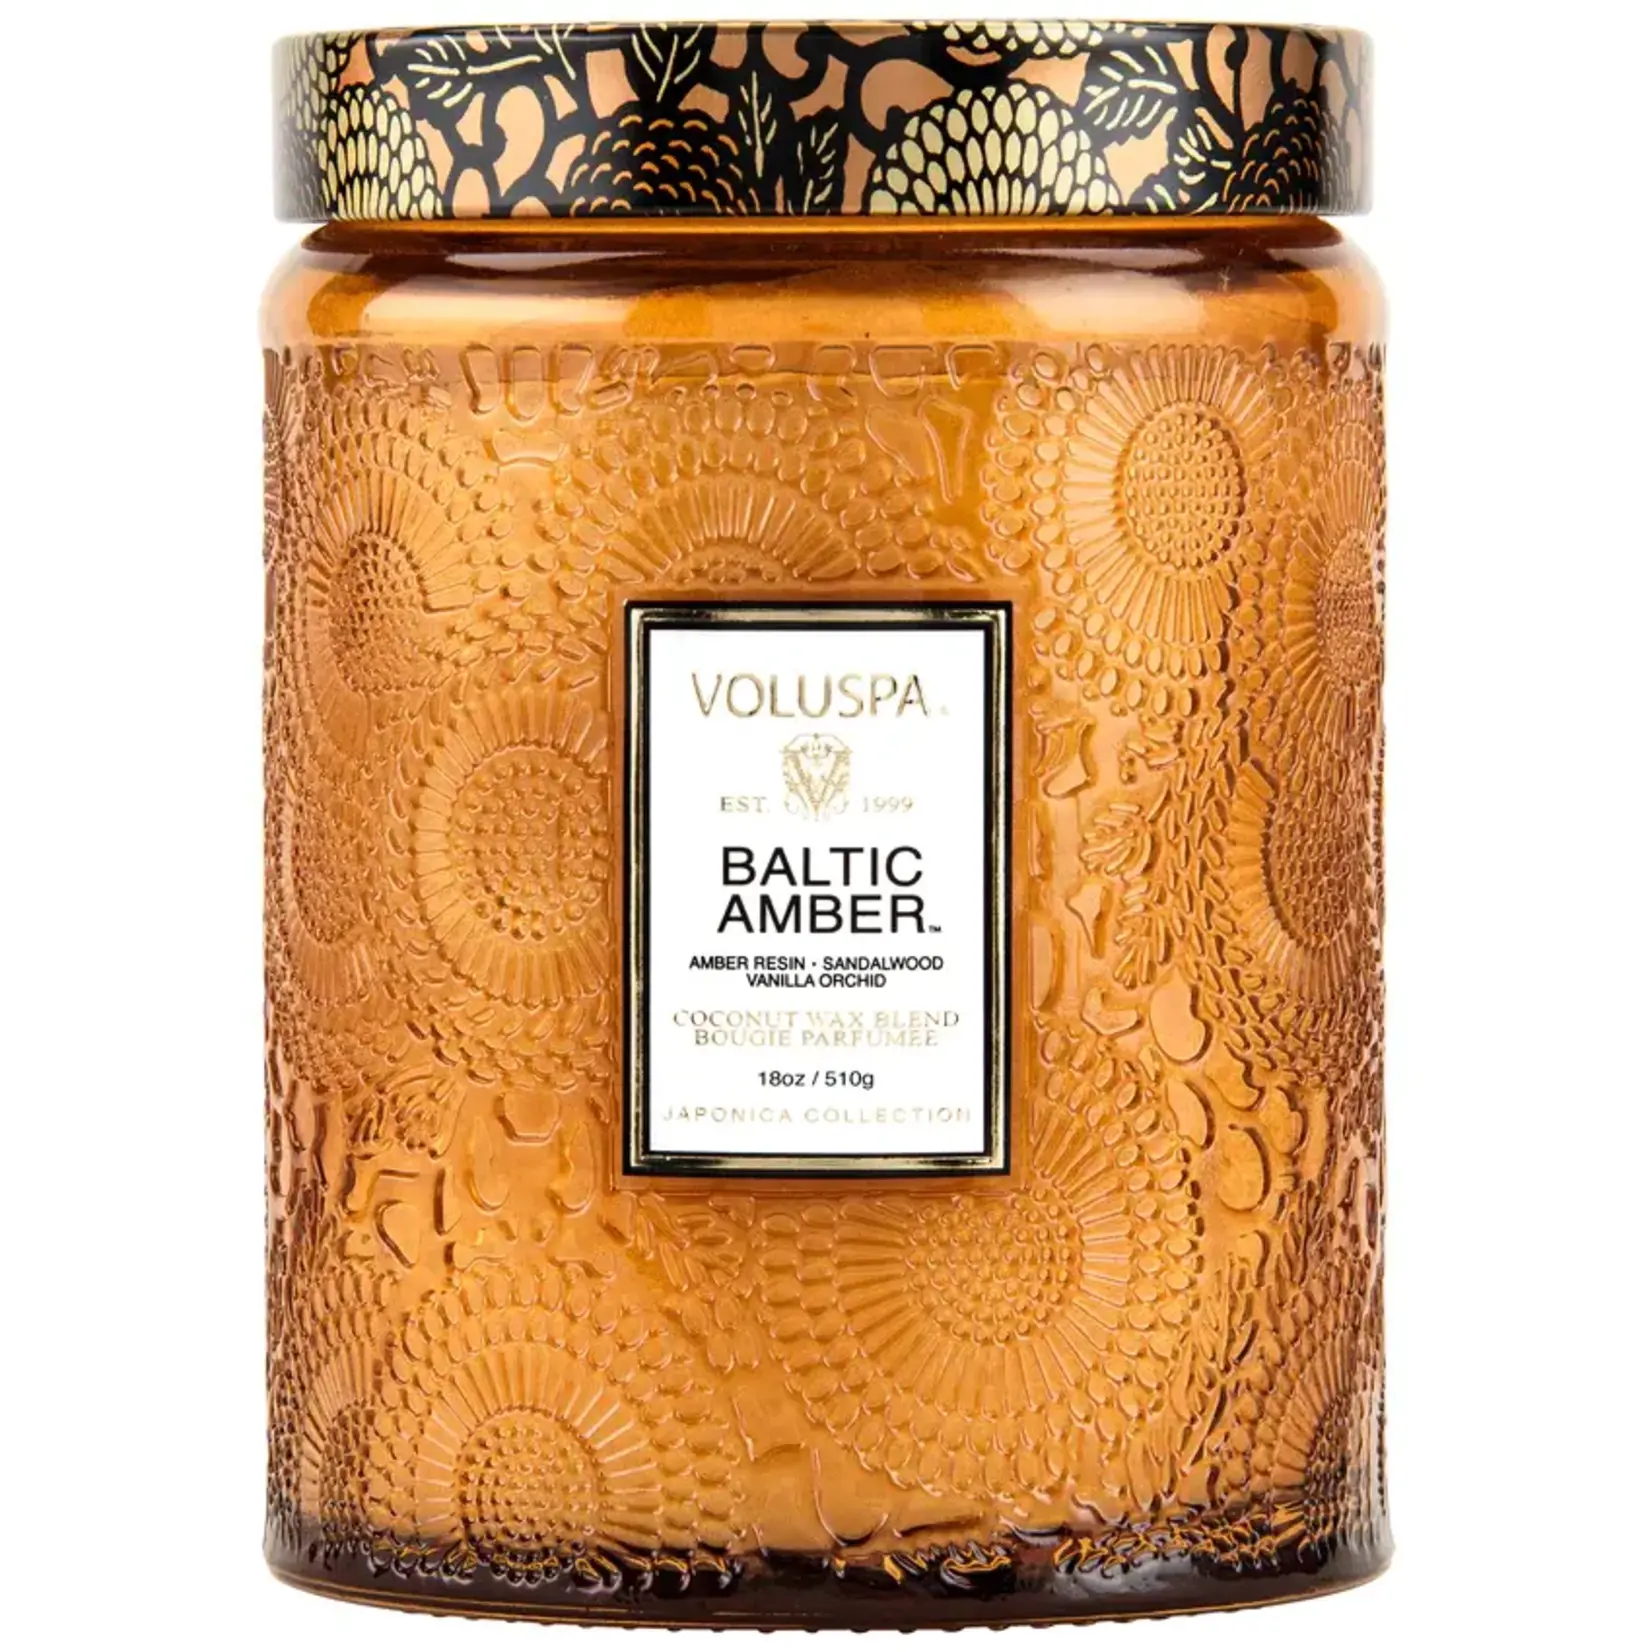 Voluspa Flame and Wax Baltic Amber Large Jar Candle